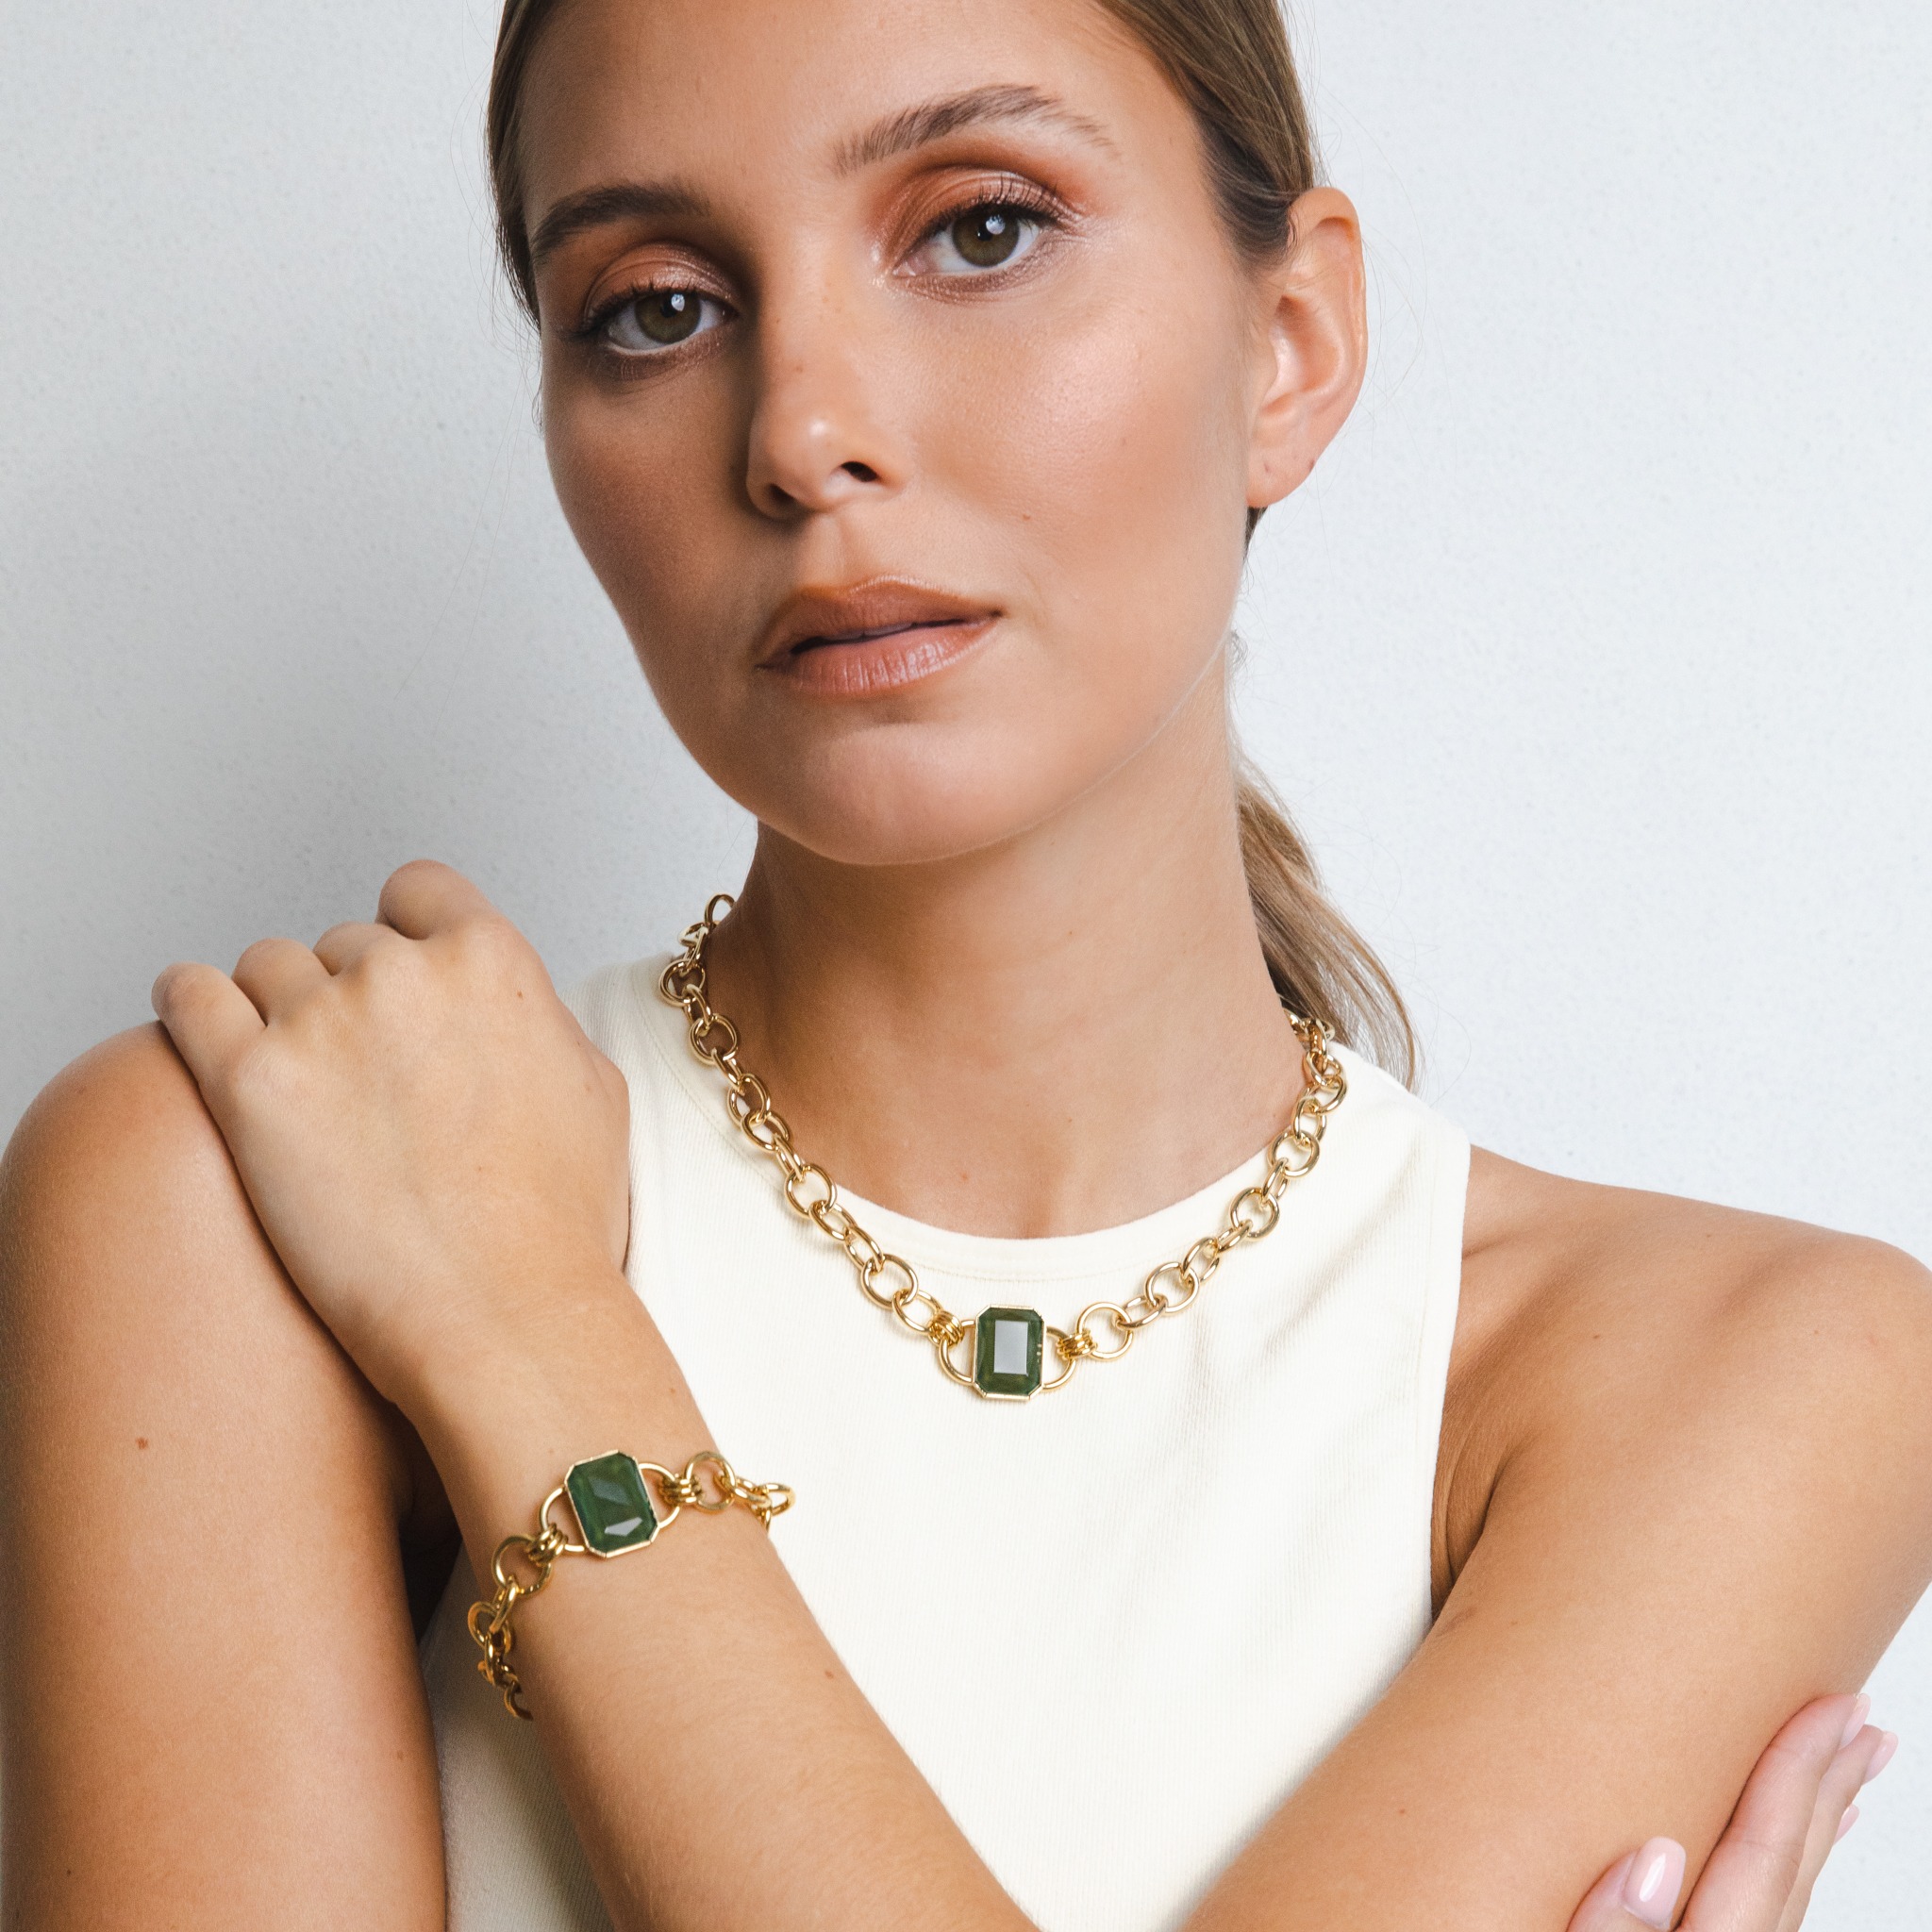 Tiffany green stones necklace